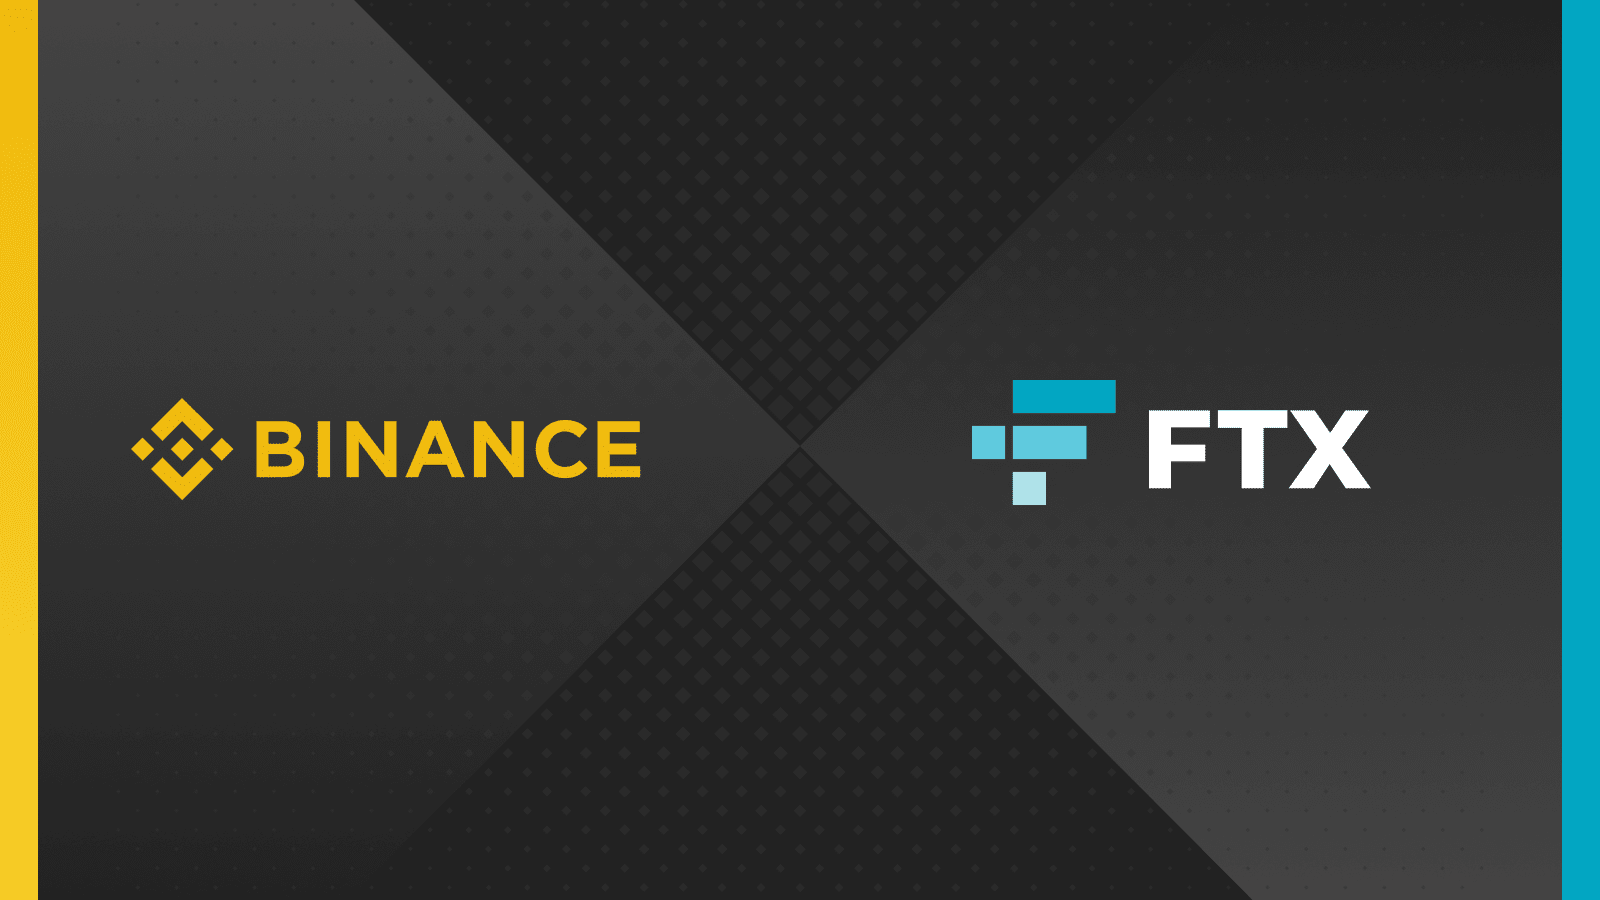 Binance to acquire FTX